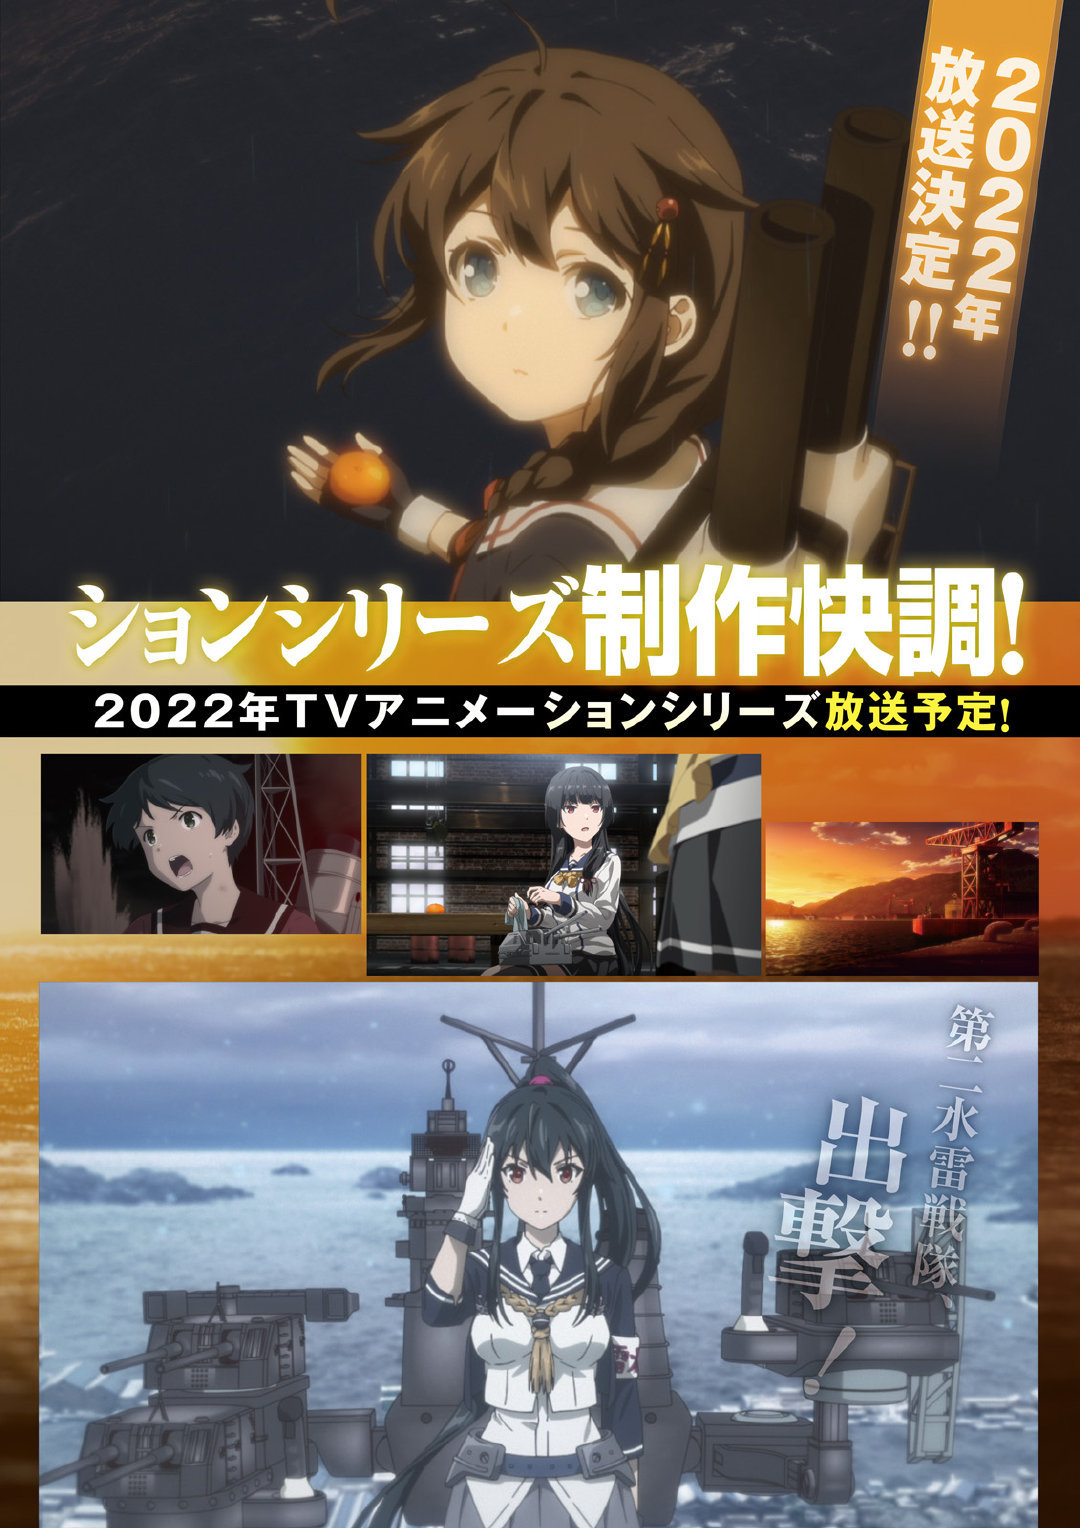 TV动画「舰队COLLECTION」第二季画面公开，将于2022年播出